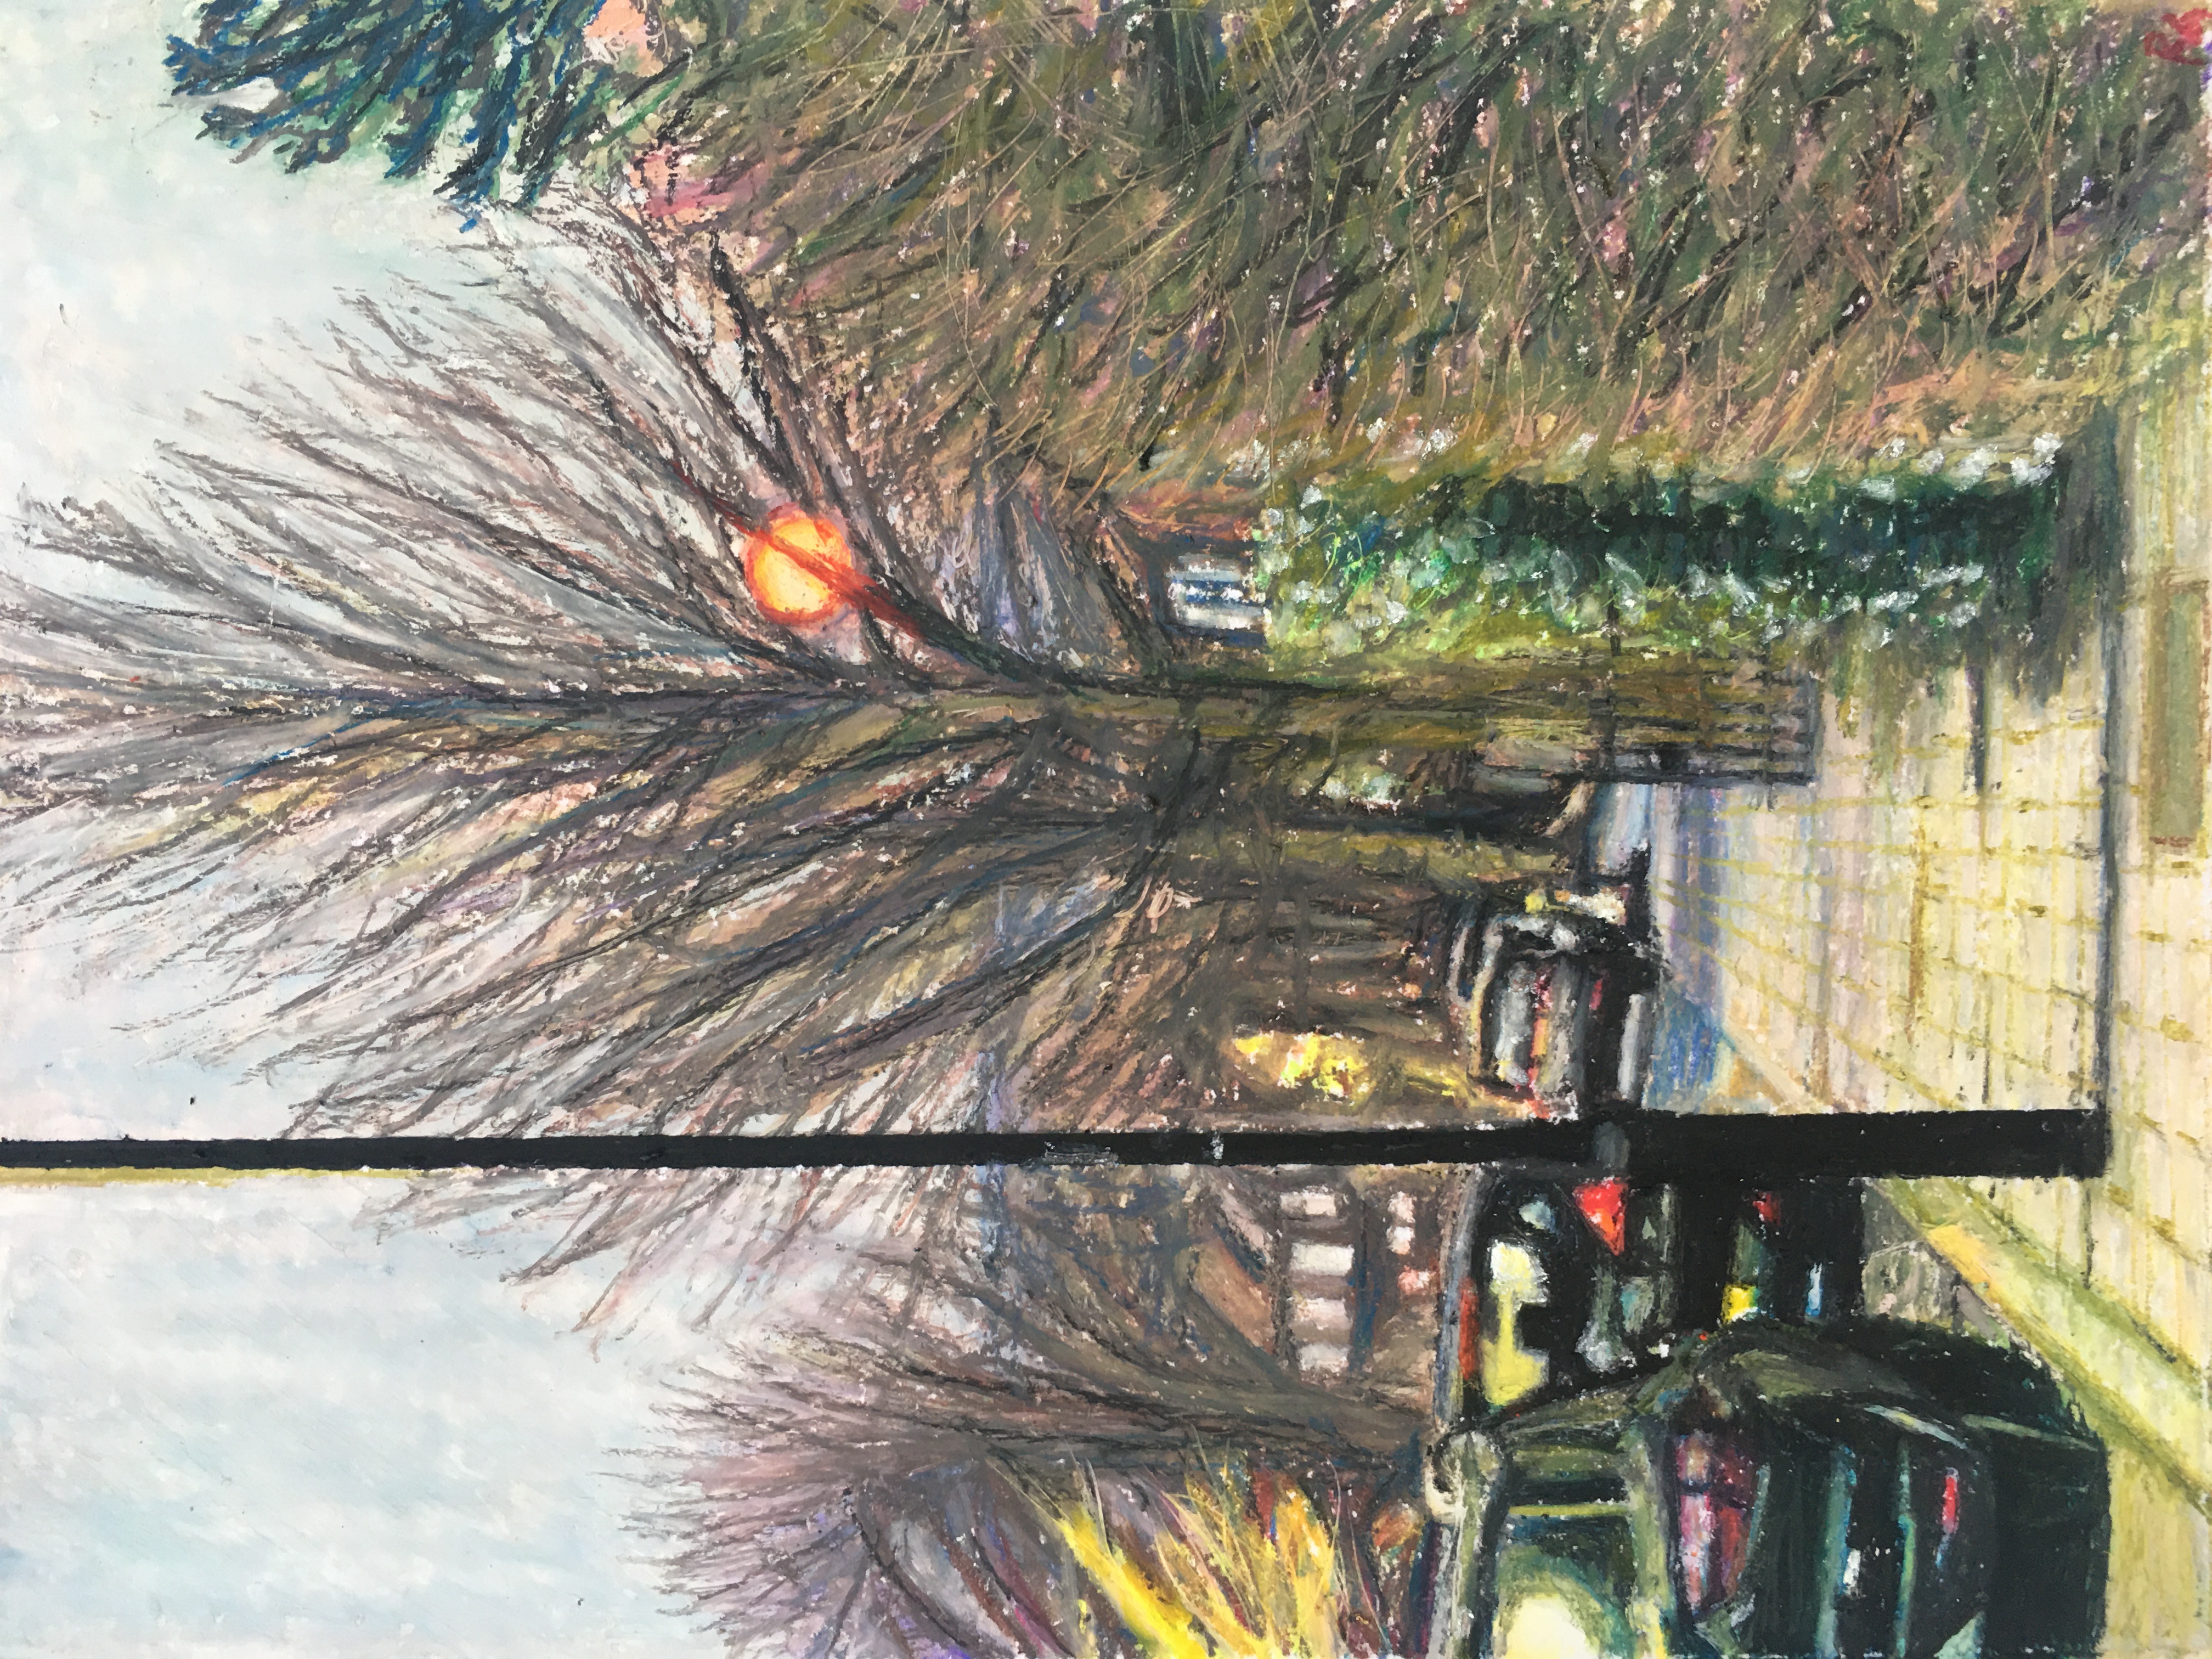 Rebecca Annan, "Moonlit Street in South London", oil pastel on sennelier card, 15 x 20cm, c. 2021.